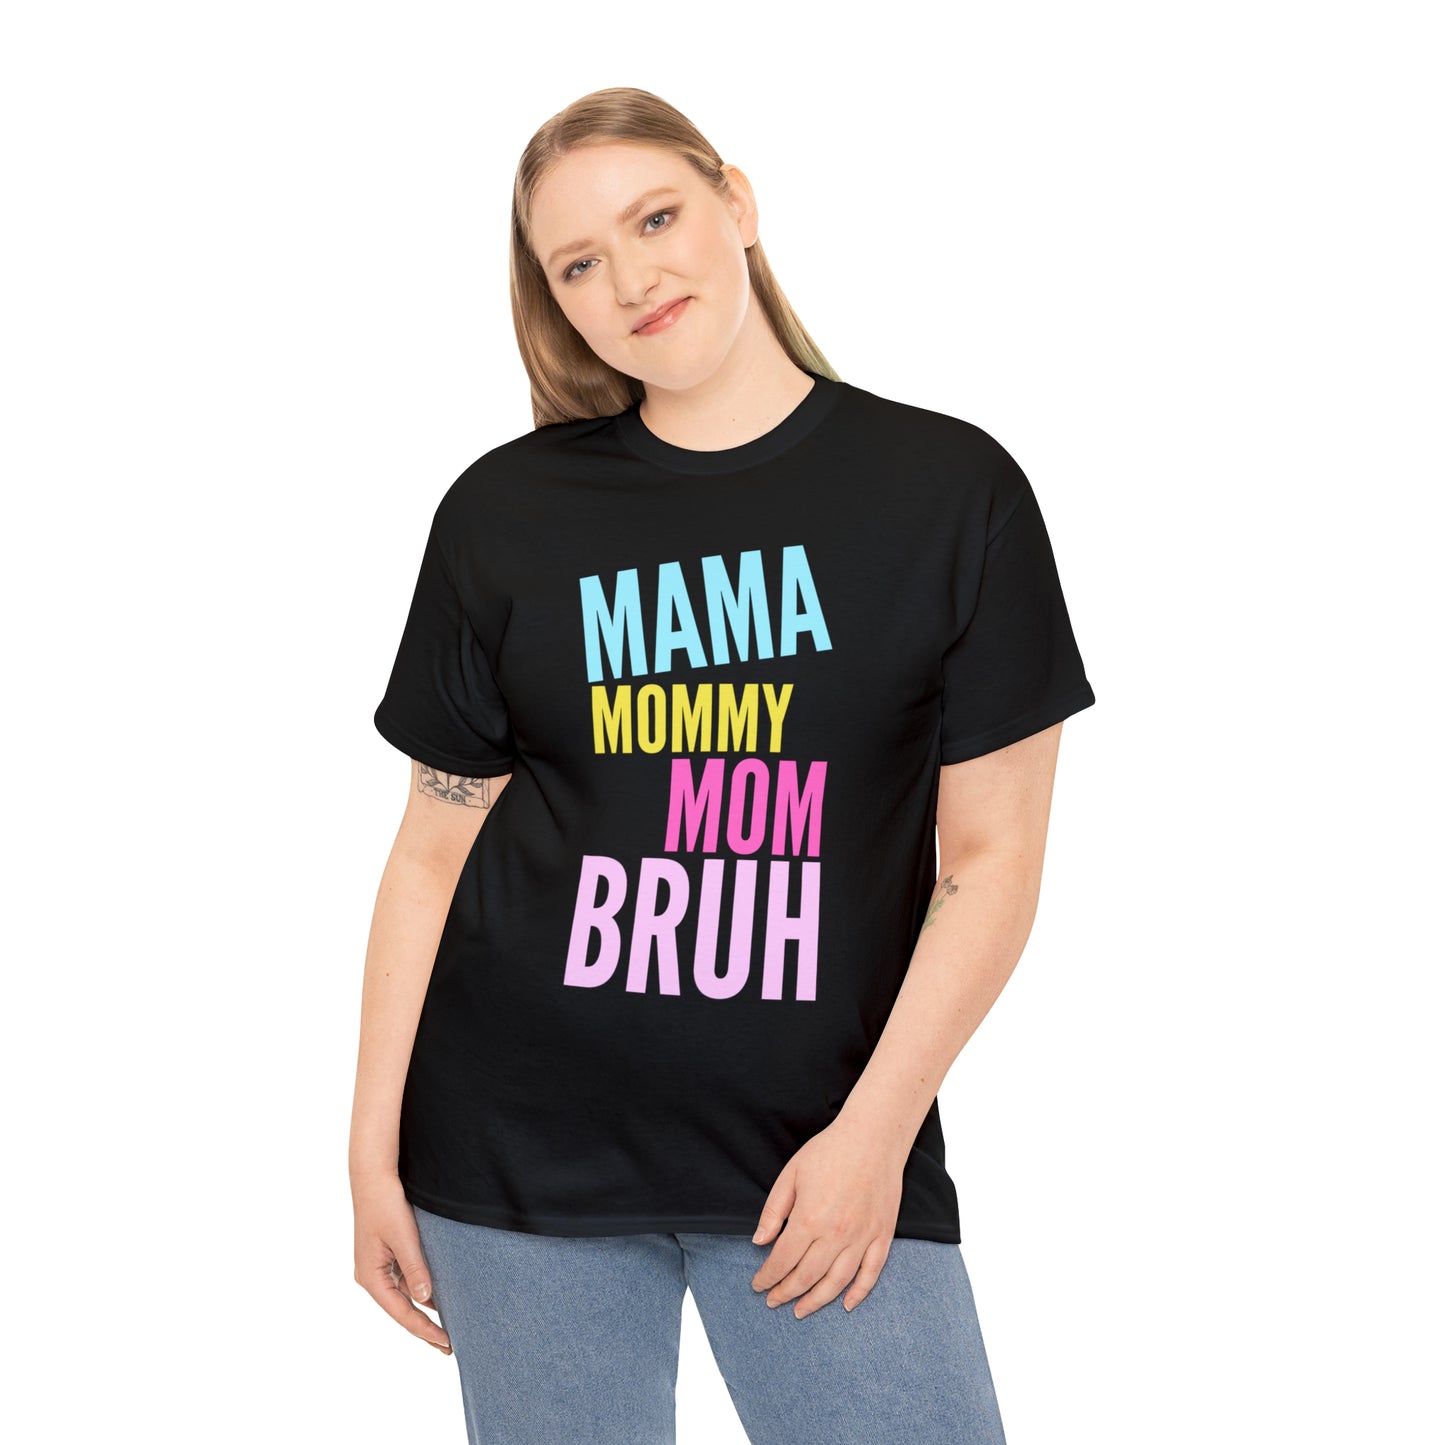 MAMA MOMMY MOM BRUH shirt